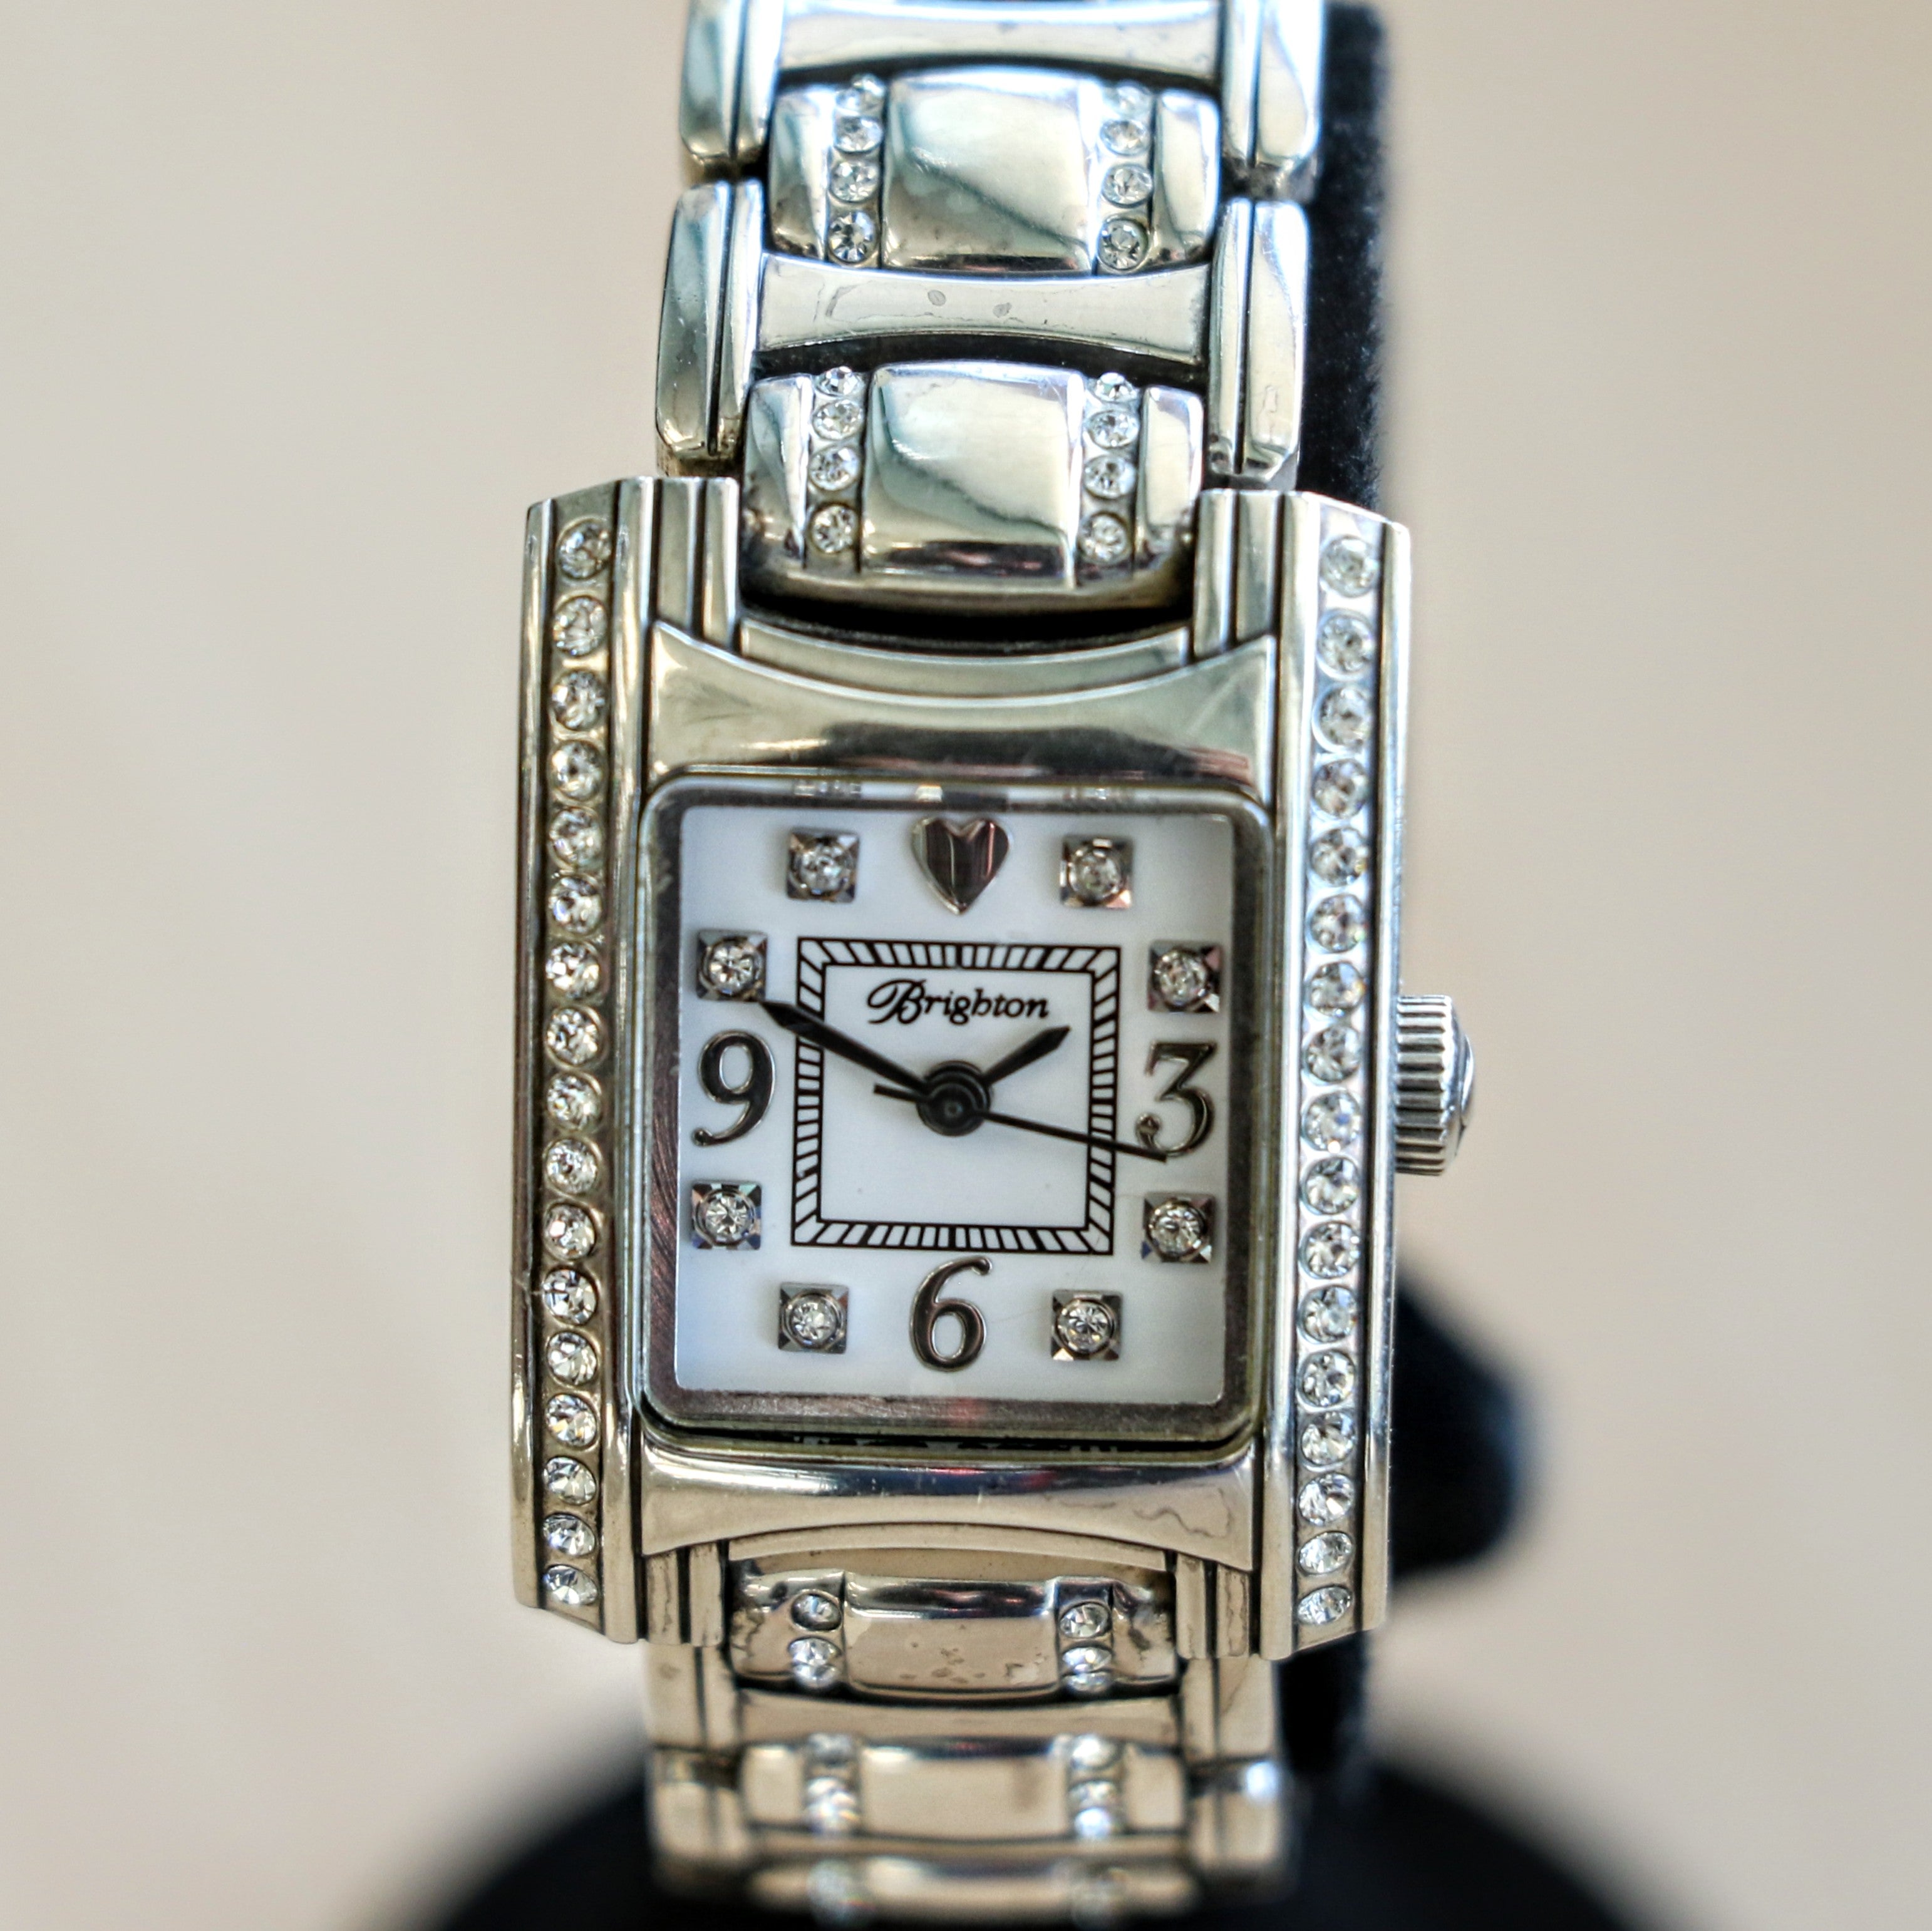 Ladies BRIGHTON "Turin" Watch Solid Silver and Swarovski Crystals Wristwatch